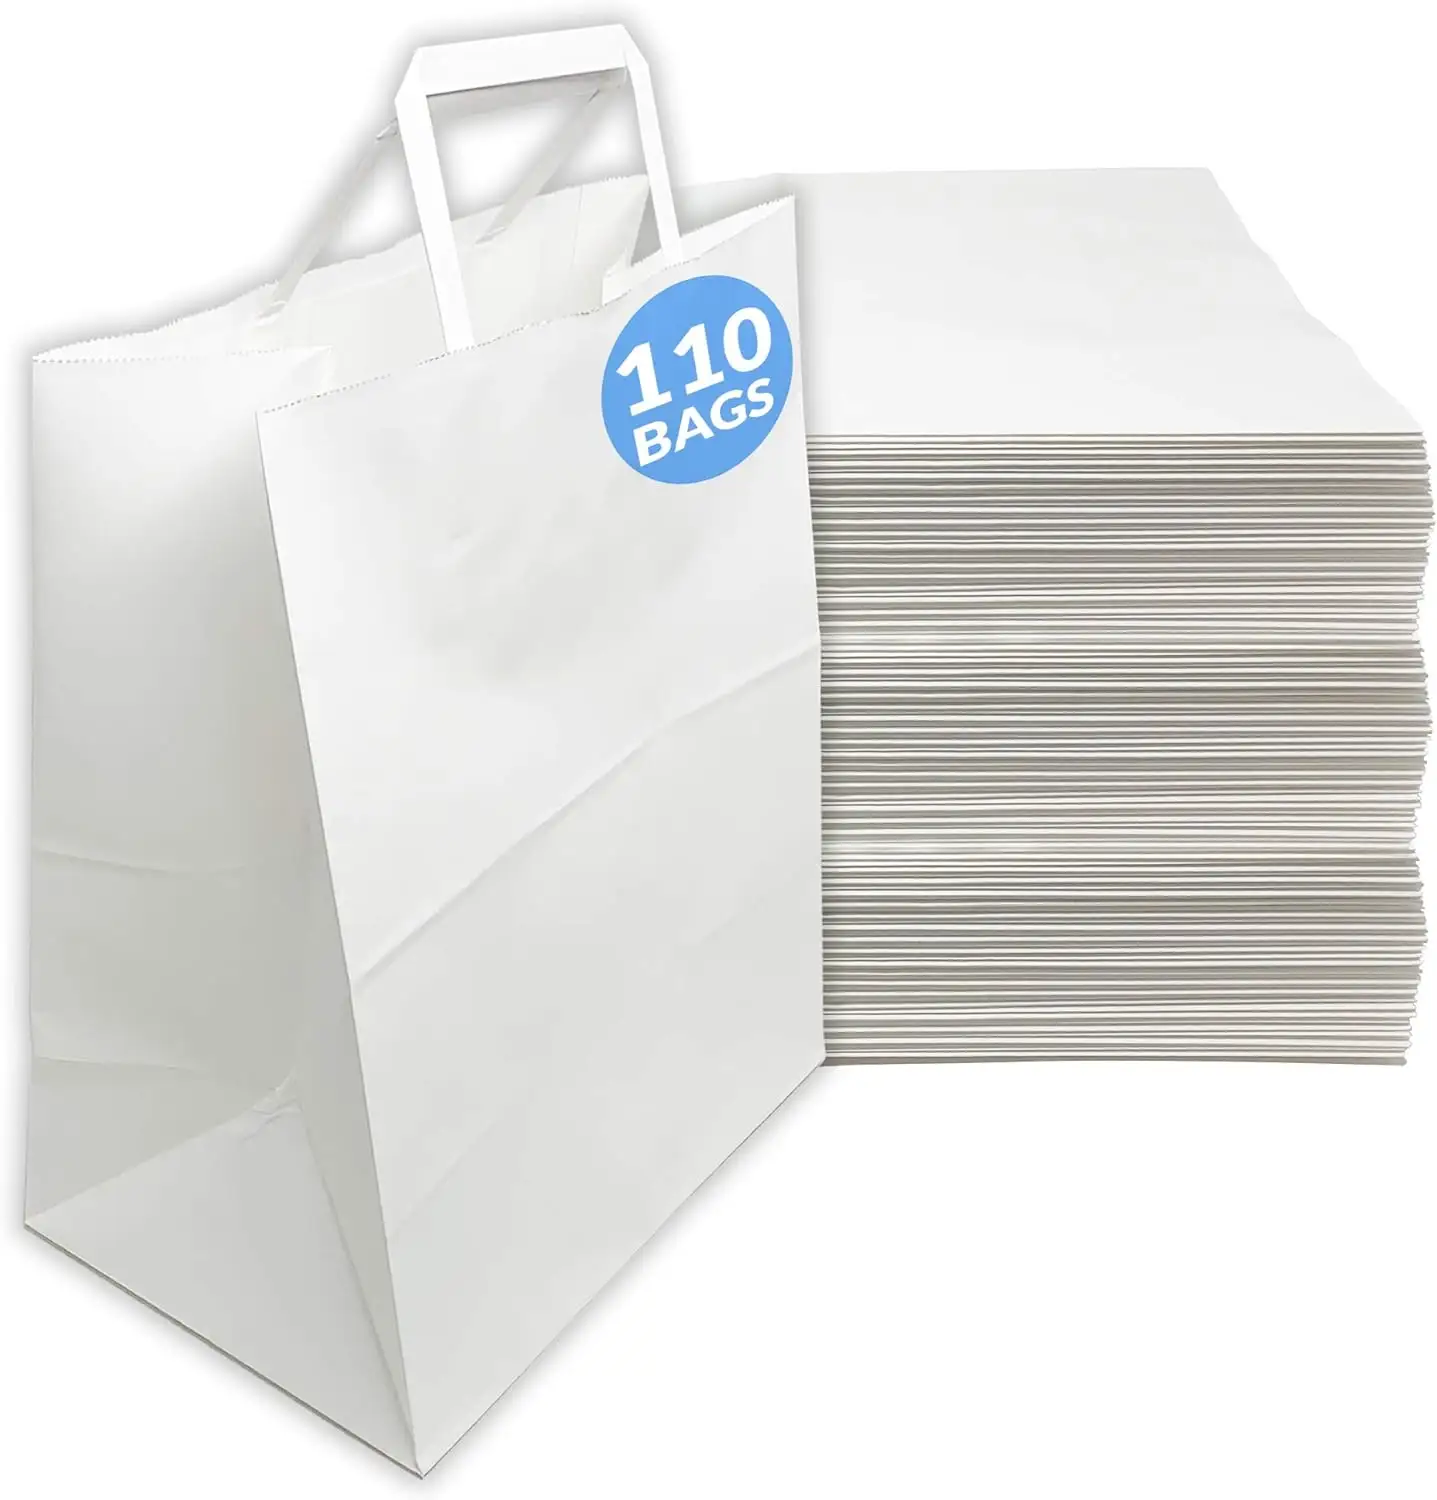 New arrival shopping gift bag food take out bag brown/white kraft paper flat handles customized logo